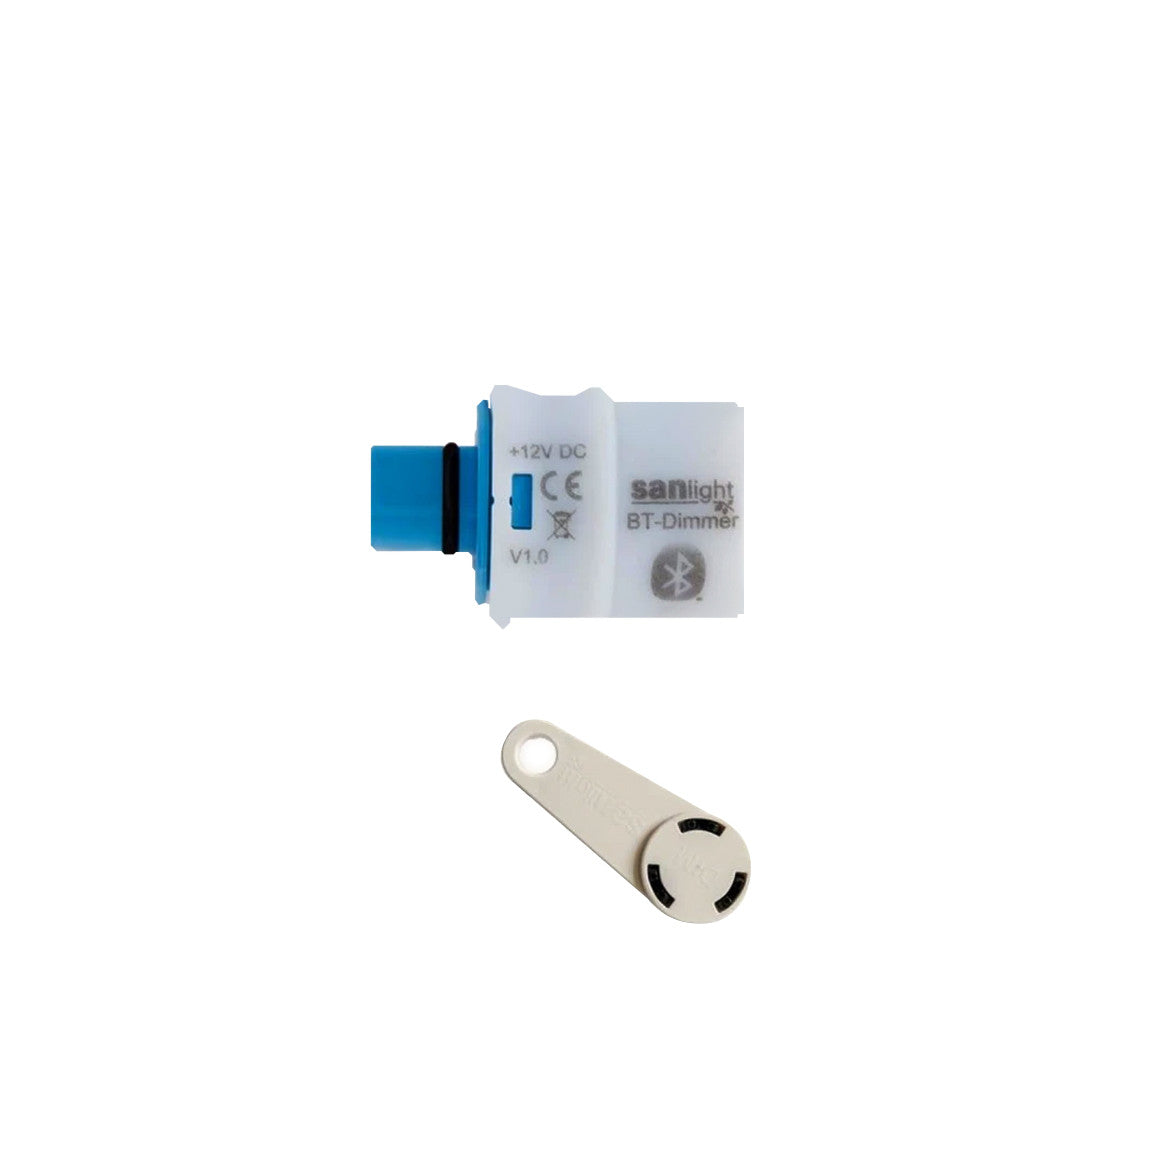 Sanlight Bluetooth Dimmer EVO-Serie